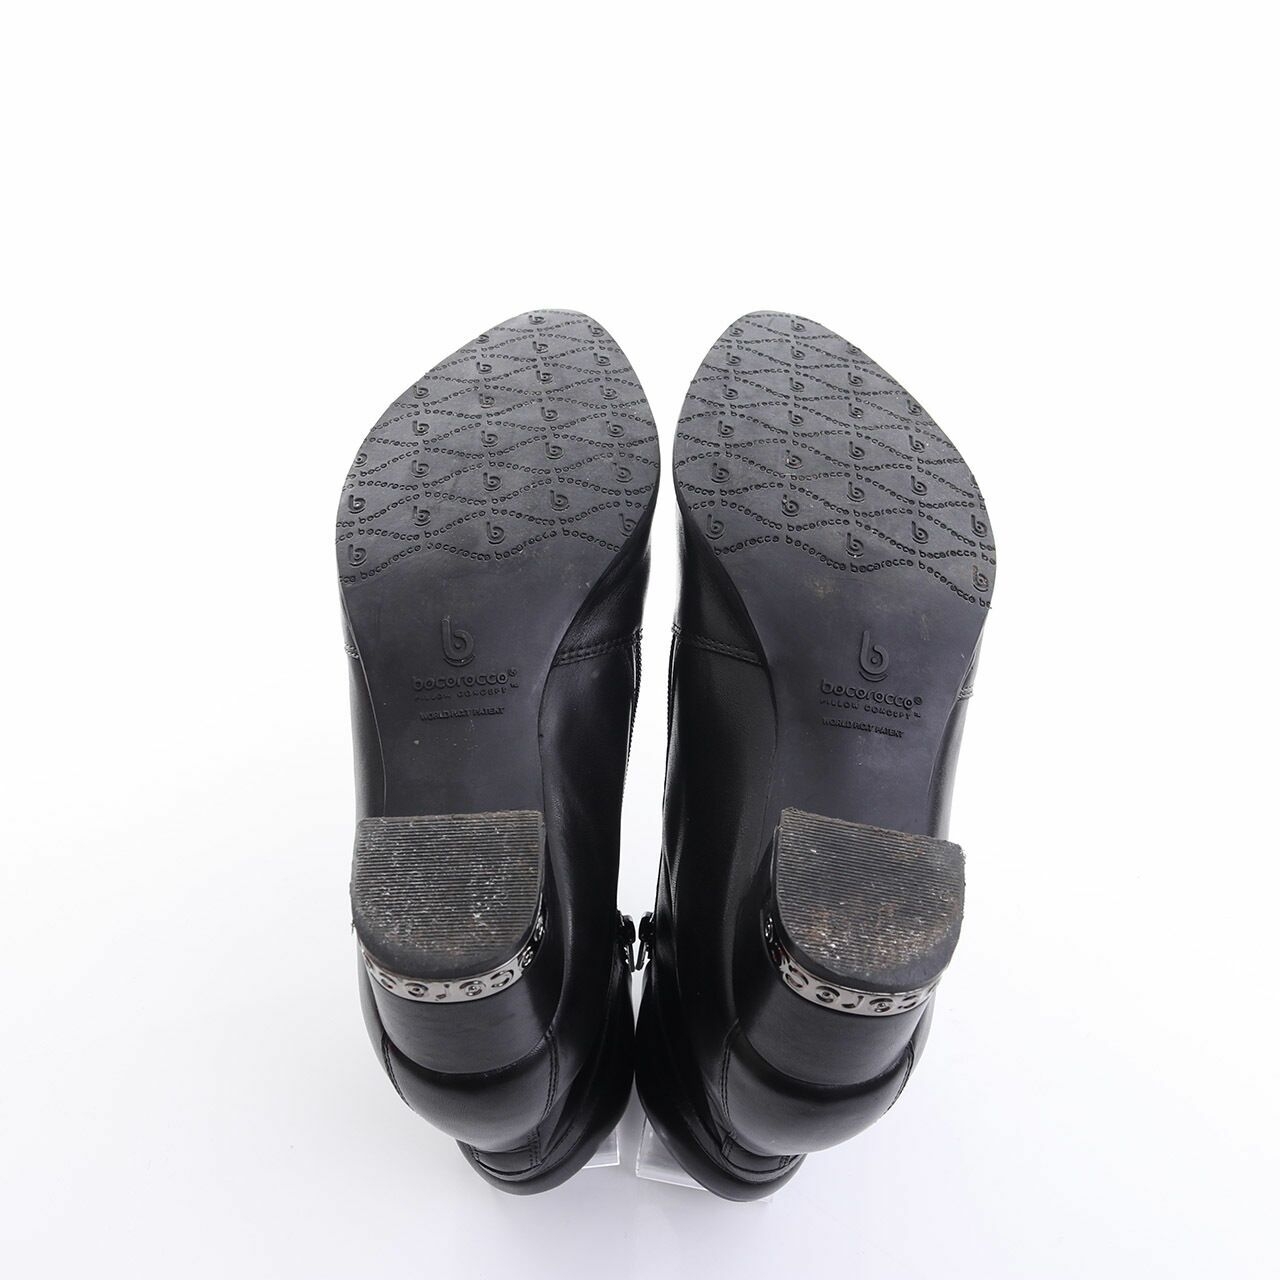 Bocorocco Ankle Black Heels Boots